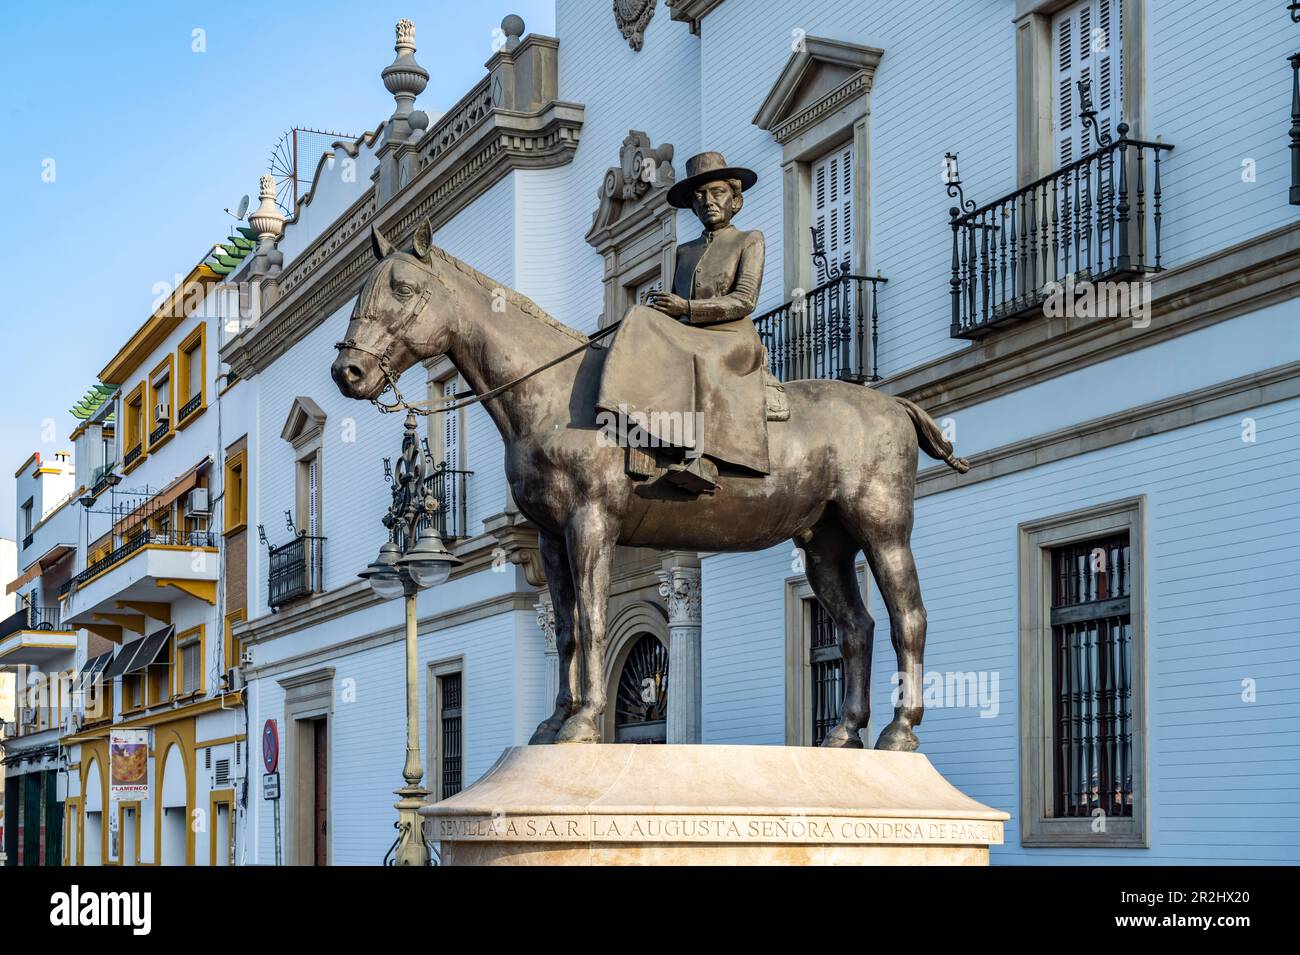 Equestrian statue of Augusta Senora Condesa de Barcelona at the bullring in Seville, Andalusia, SpainSpain Stock Photo